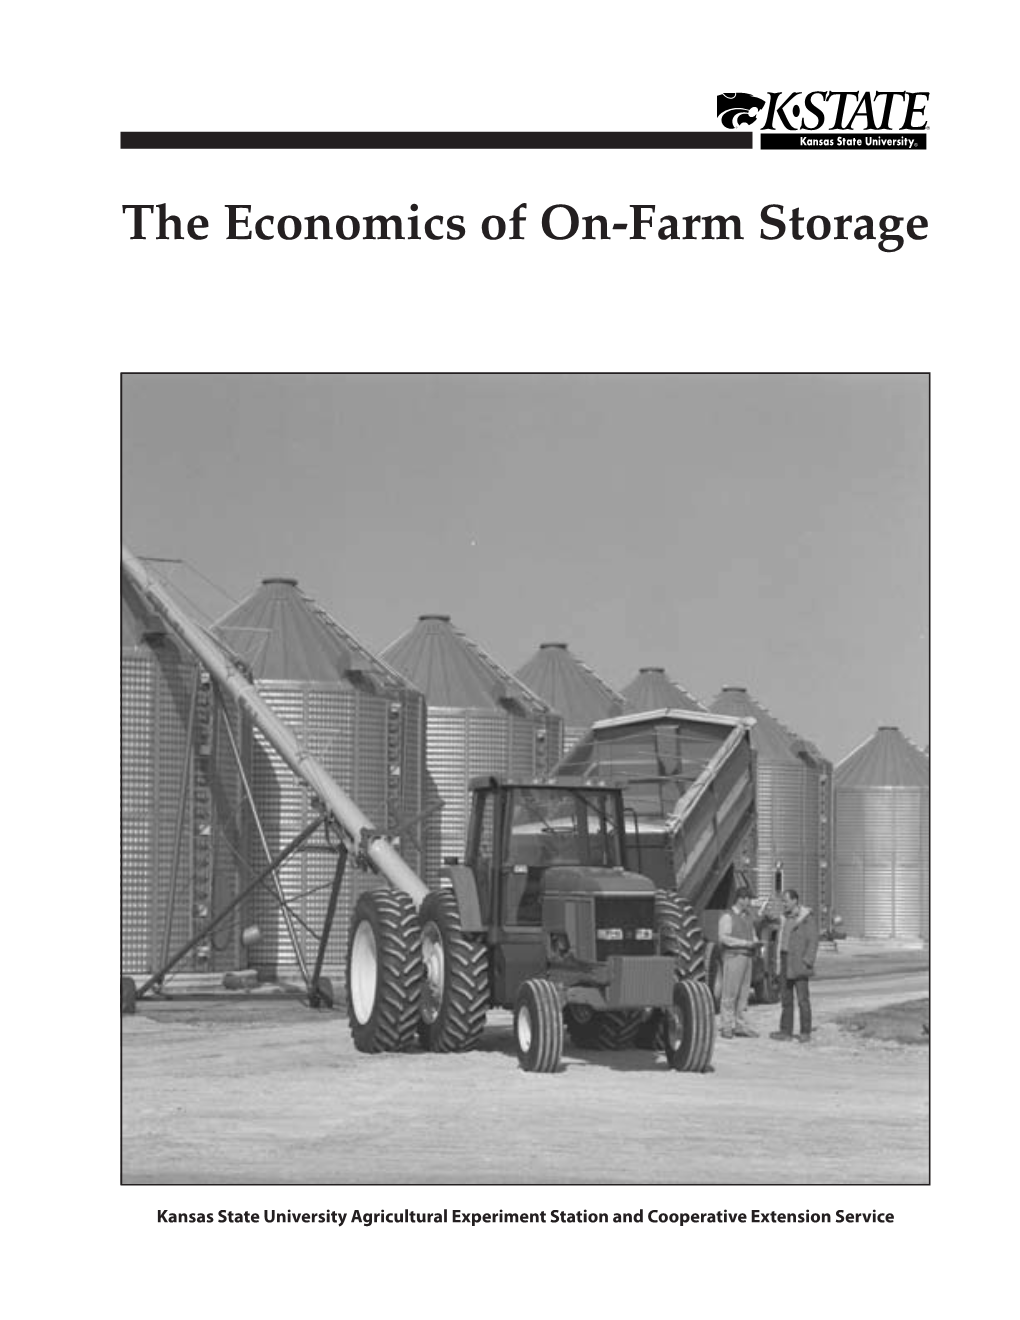 MF2474 Economics of On-Farm Storage